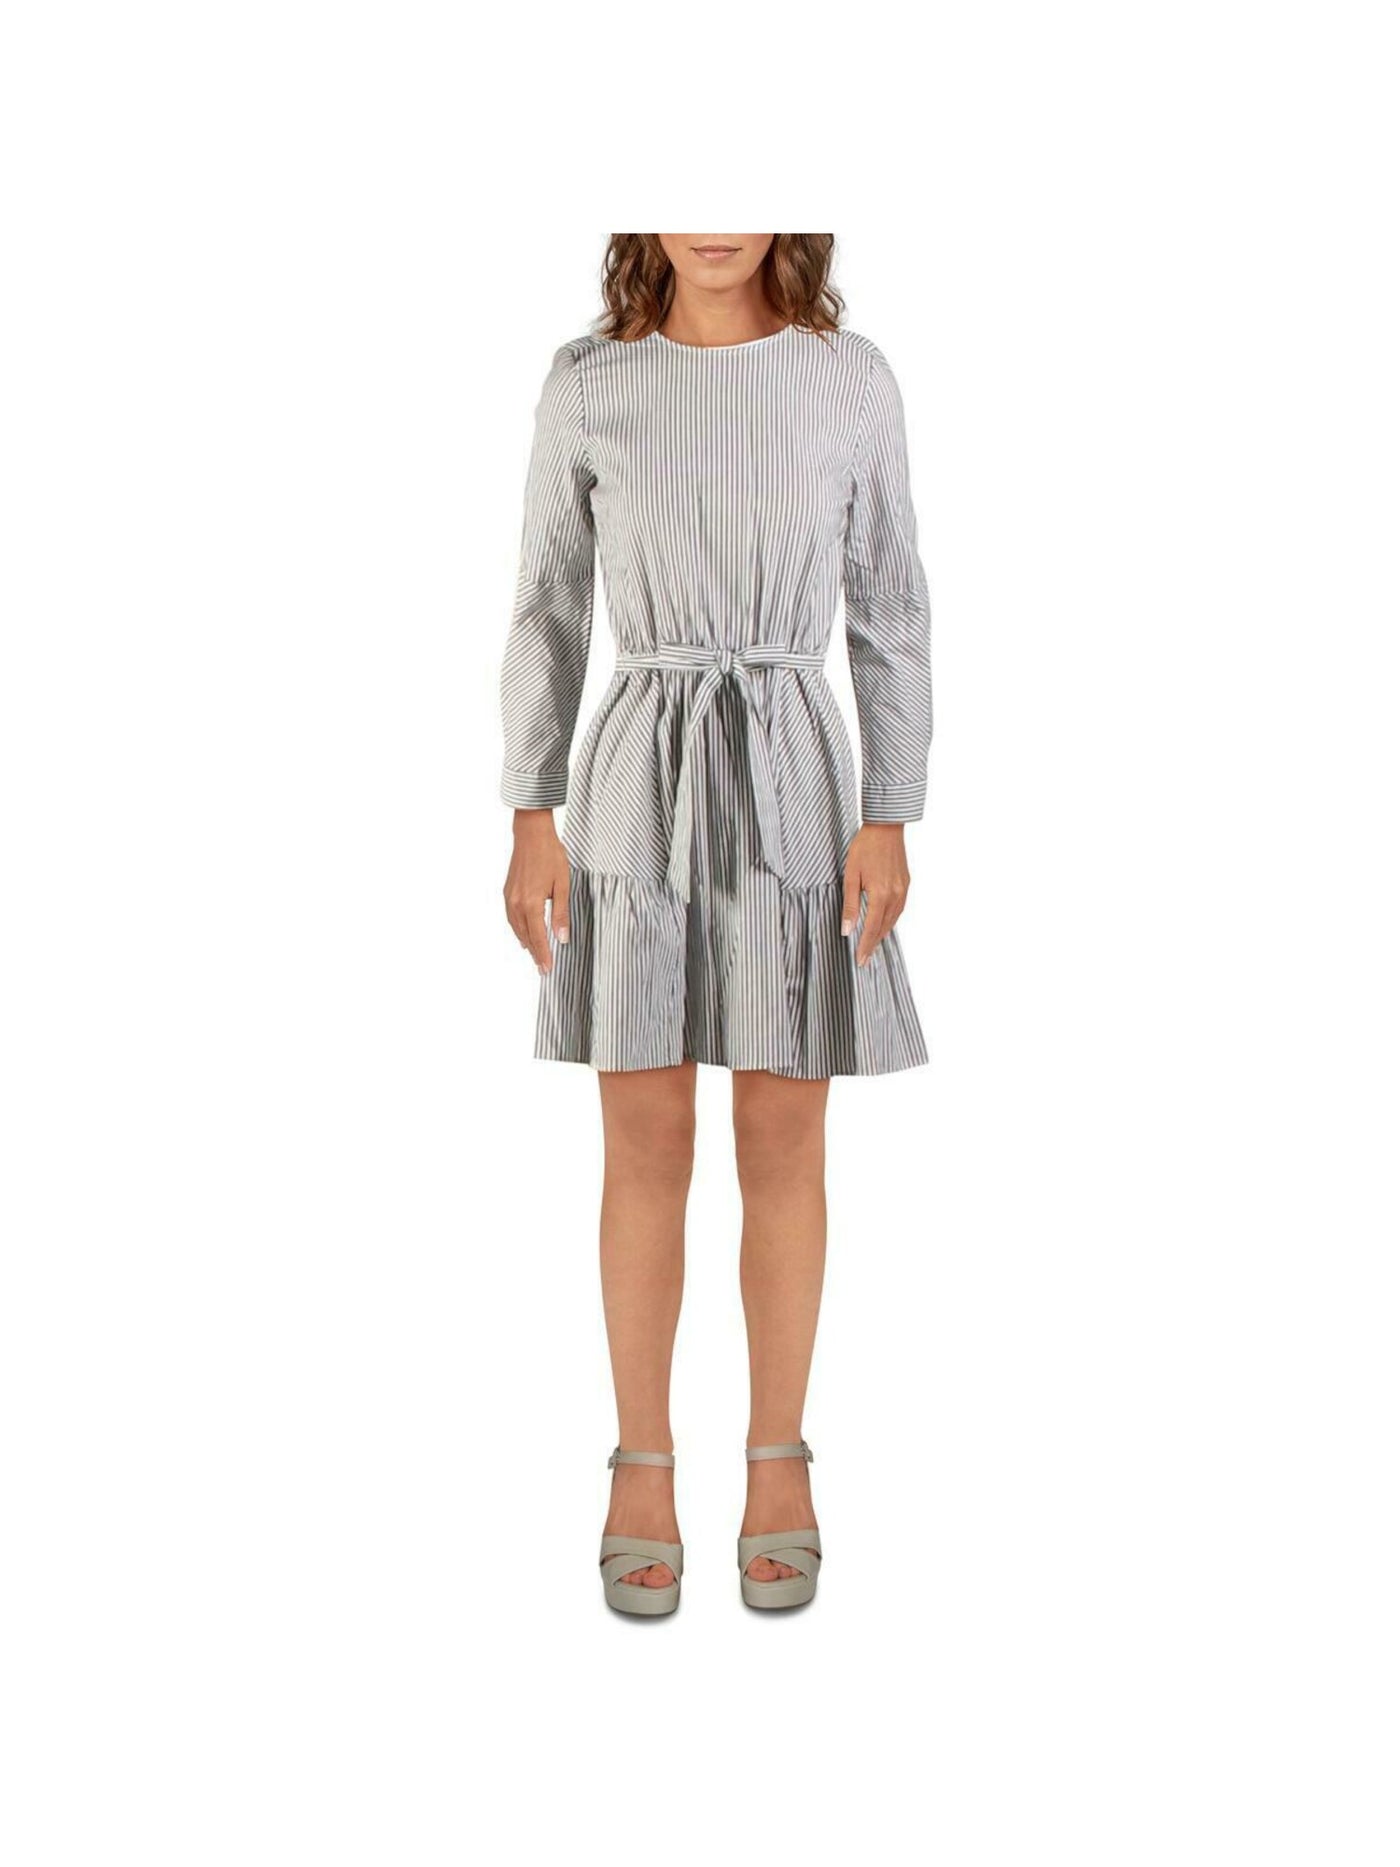 AQUA Womens Gray Striped Long Sleeve Above The Knee A-Line Dress Size: M